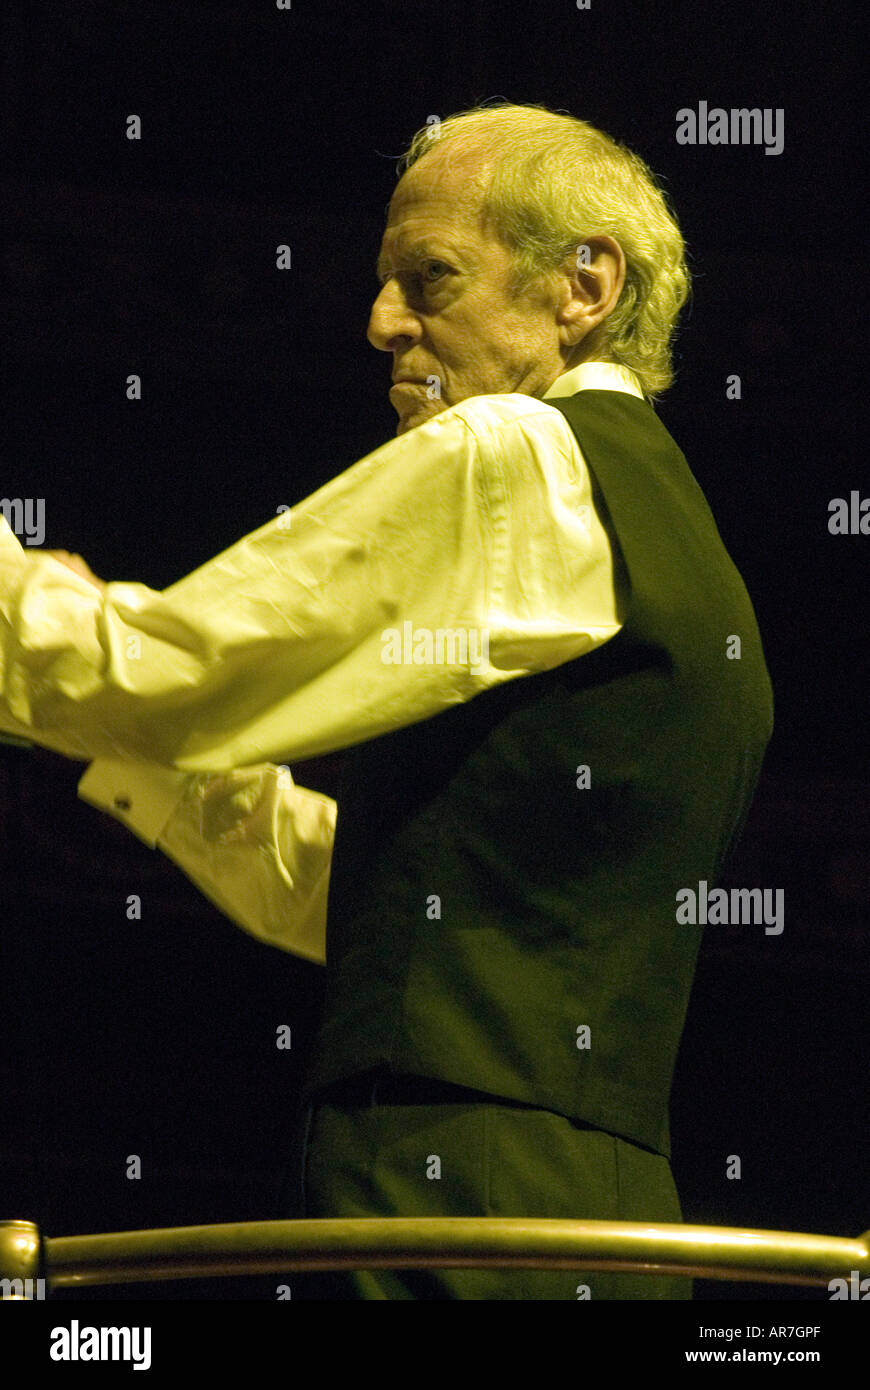 Oscar winning British film composer John Barry (1933-2011) in concert at Royal Albert Hall, London, UK. 28th September 2006. Stock Photo